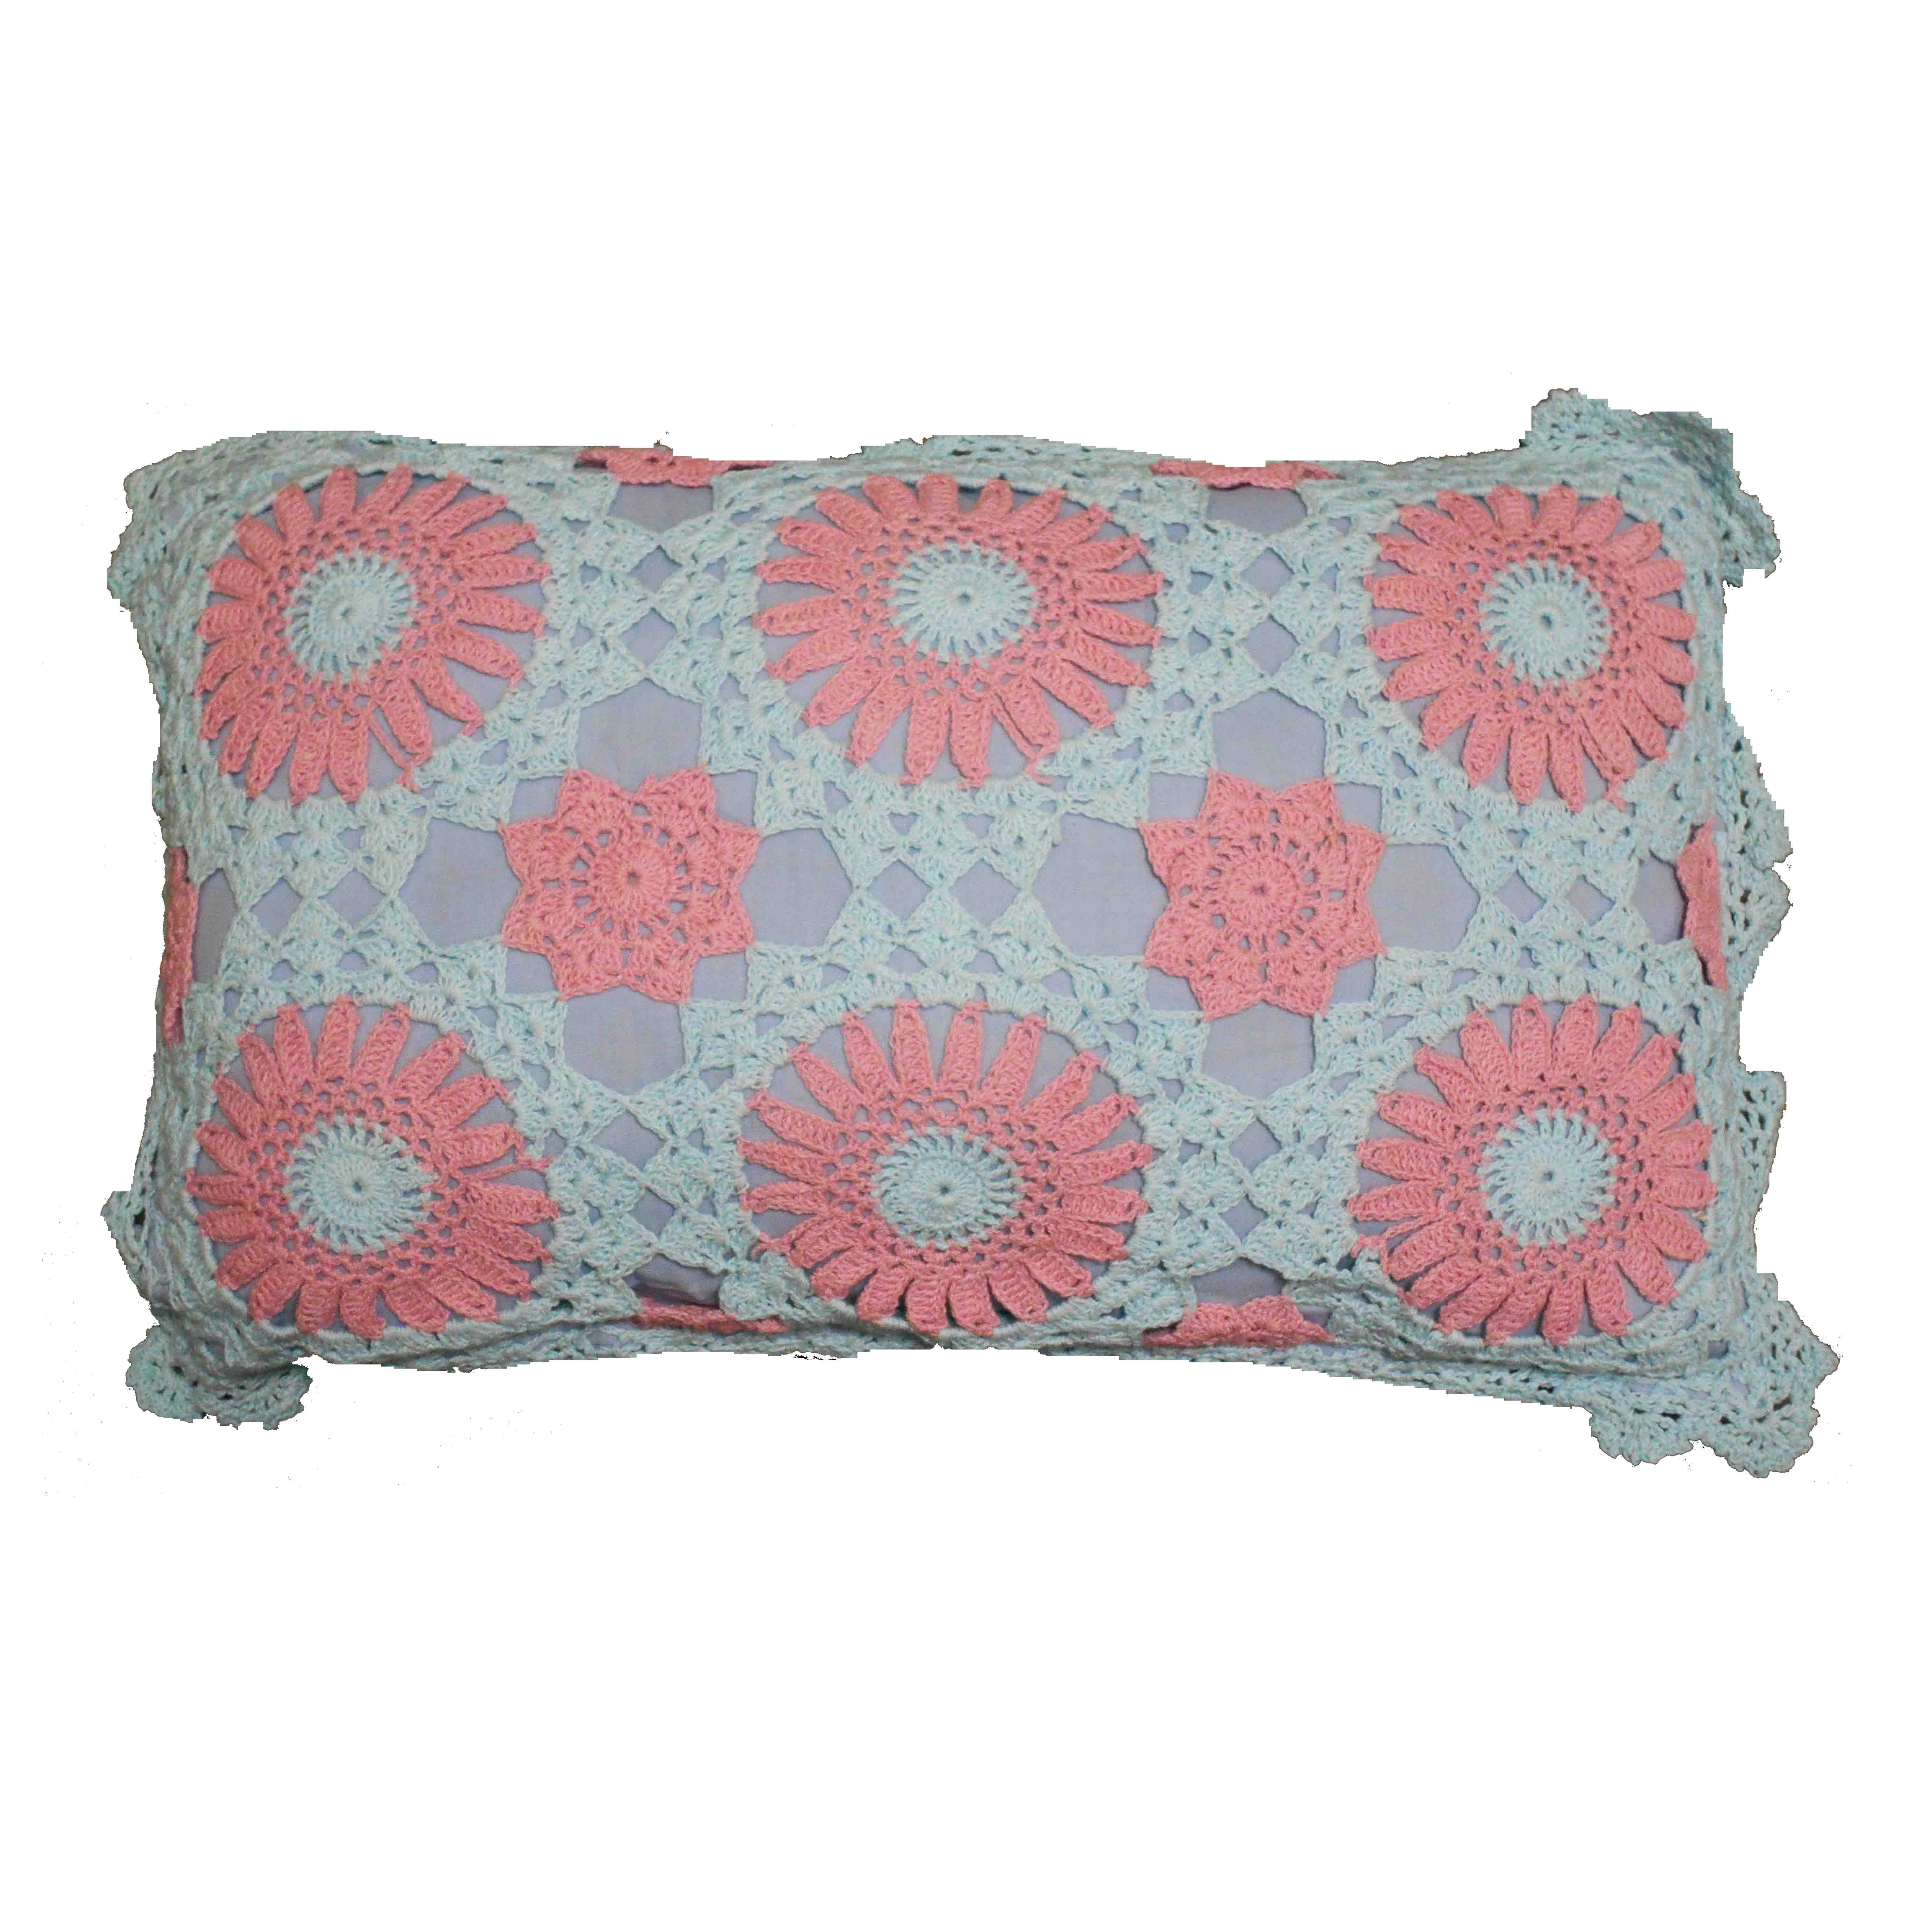 Crochet Cushion Cover